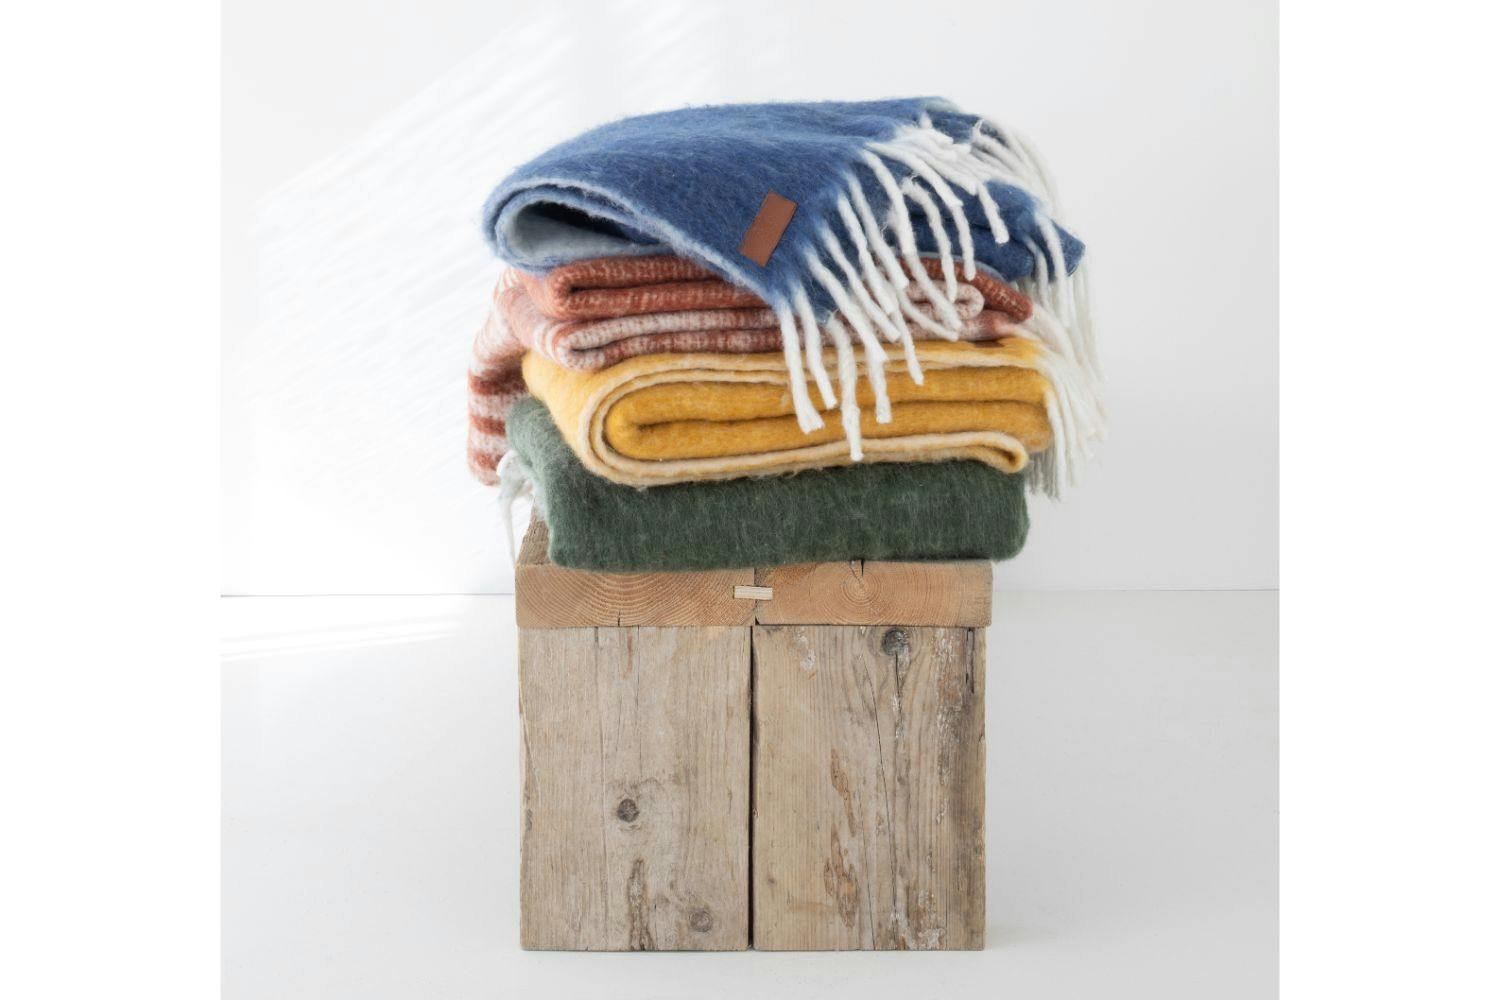 Soft Wool Mix Blanket | Cornflower Blue | 120 x 180 cm